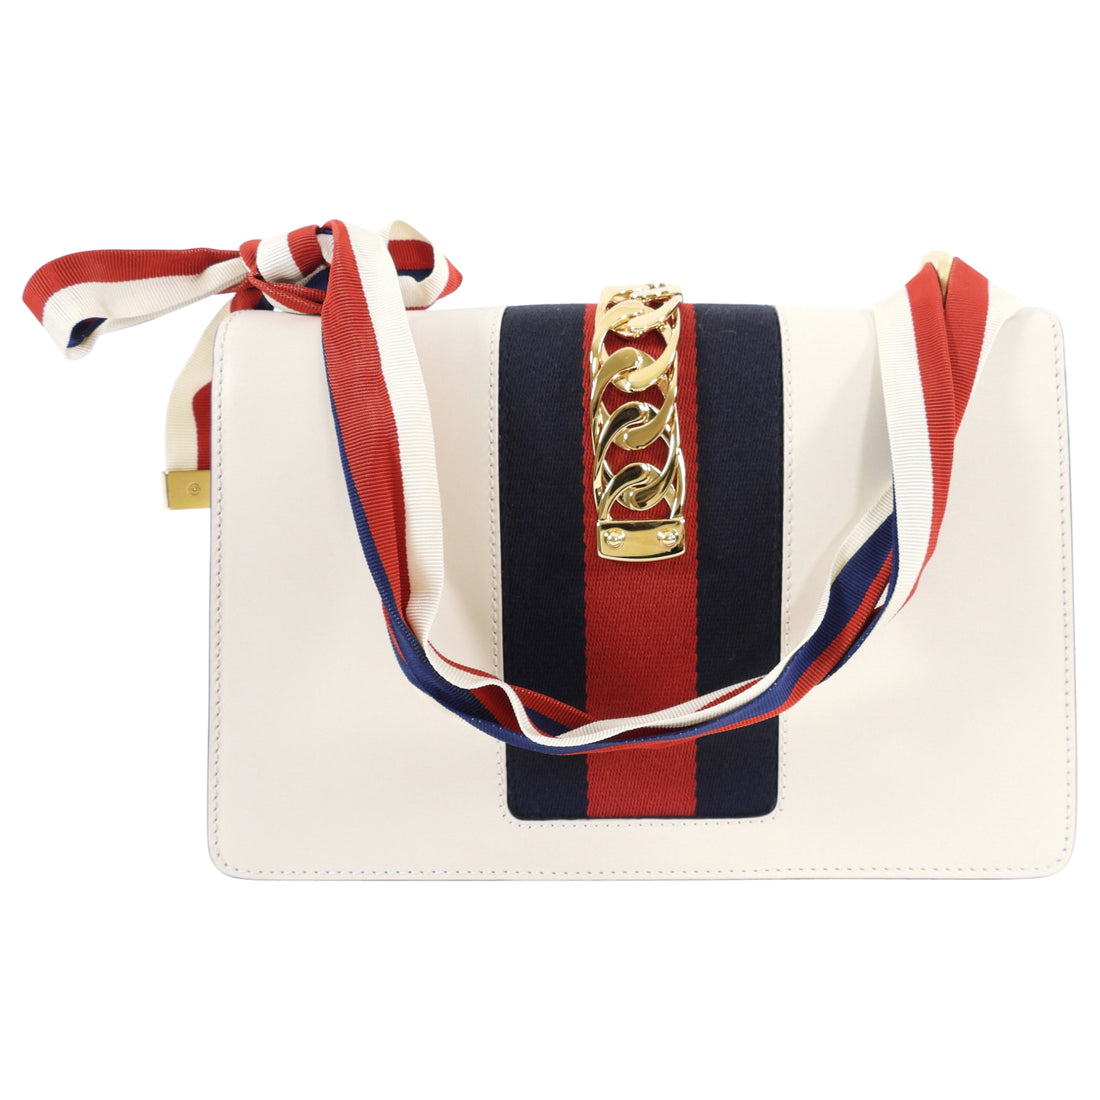 1000% AUTH 🌸 GUCCI 🌸 Limited Edition Sylvie Mini Floral White Shoulder Bag